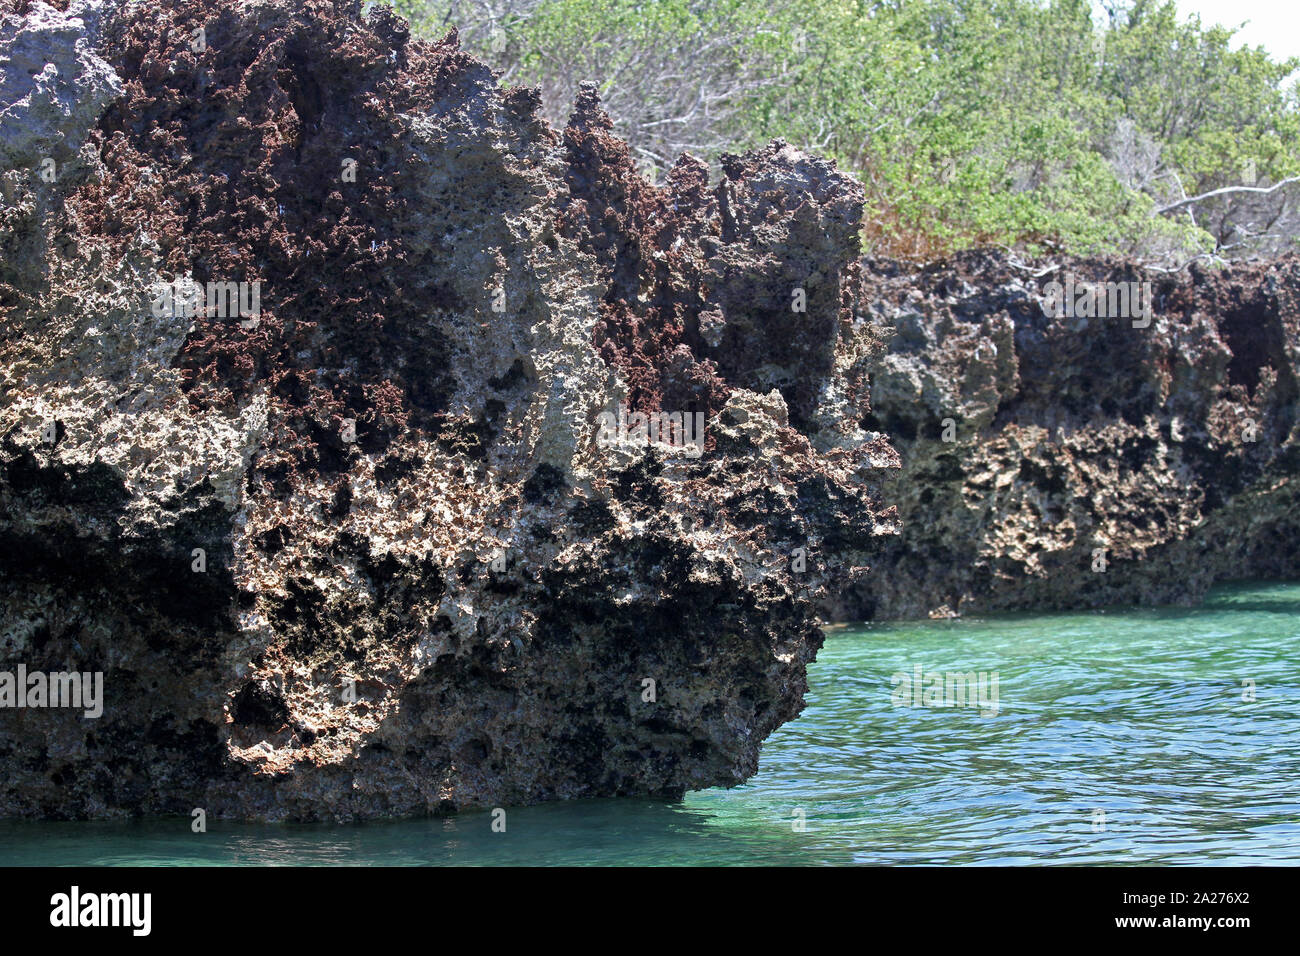 Rocky edge of a mangrove in ocean, off the coast of Zanzibar, Unguja Island, Tanzania. Stock Photo